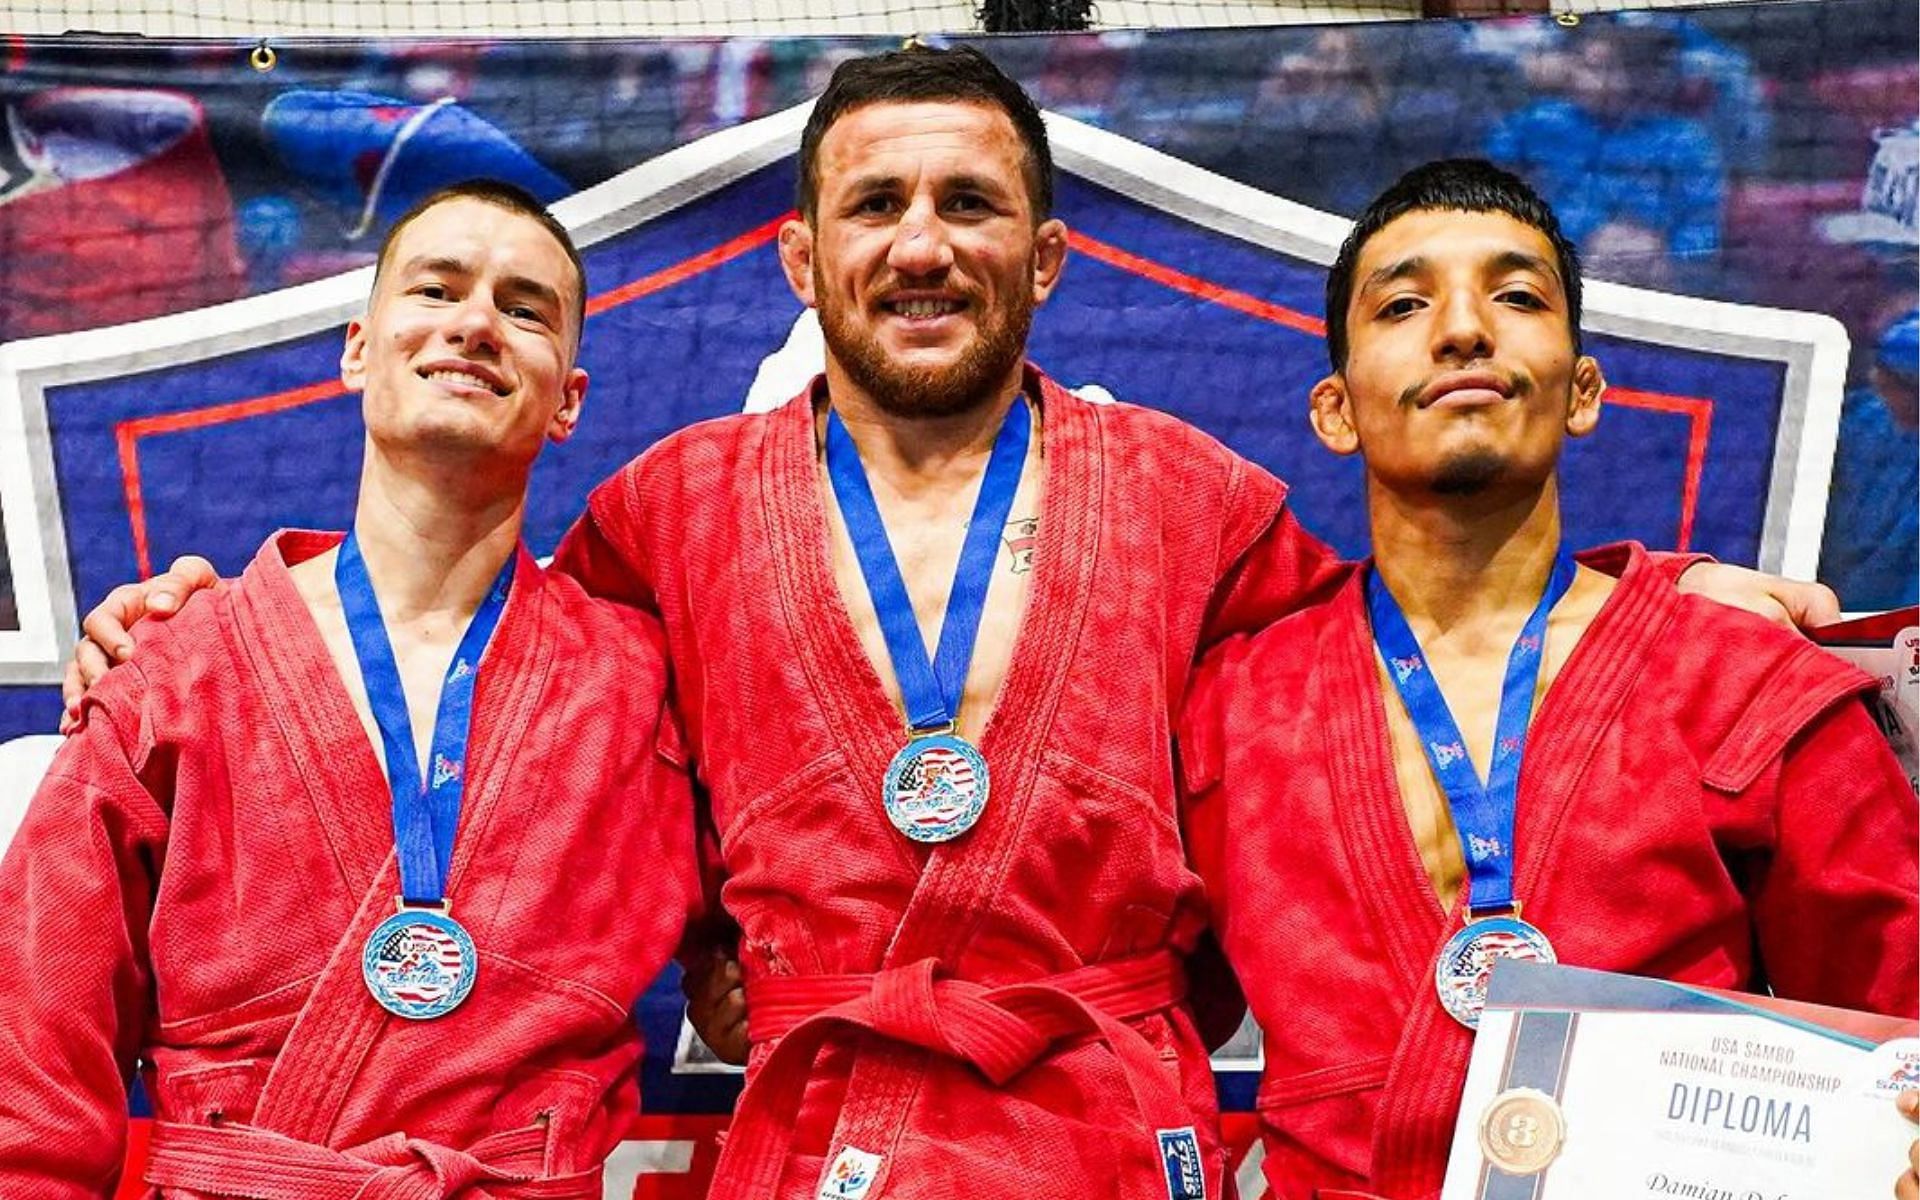 Merab Dvalishvili (middle) poses for pictures on the podium after his win. [Image courtesy @merab.dvalishvili on Instagram]